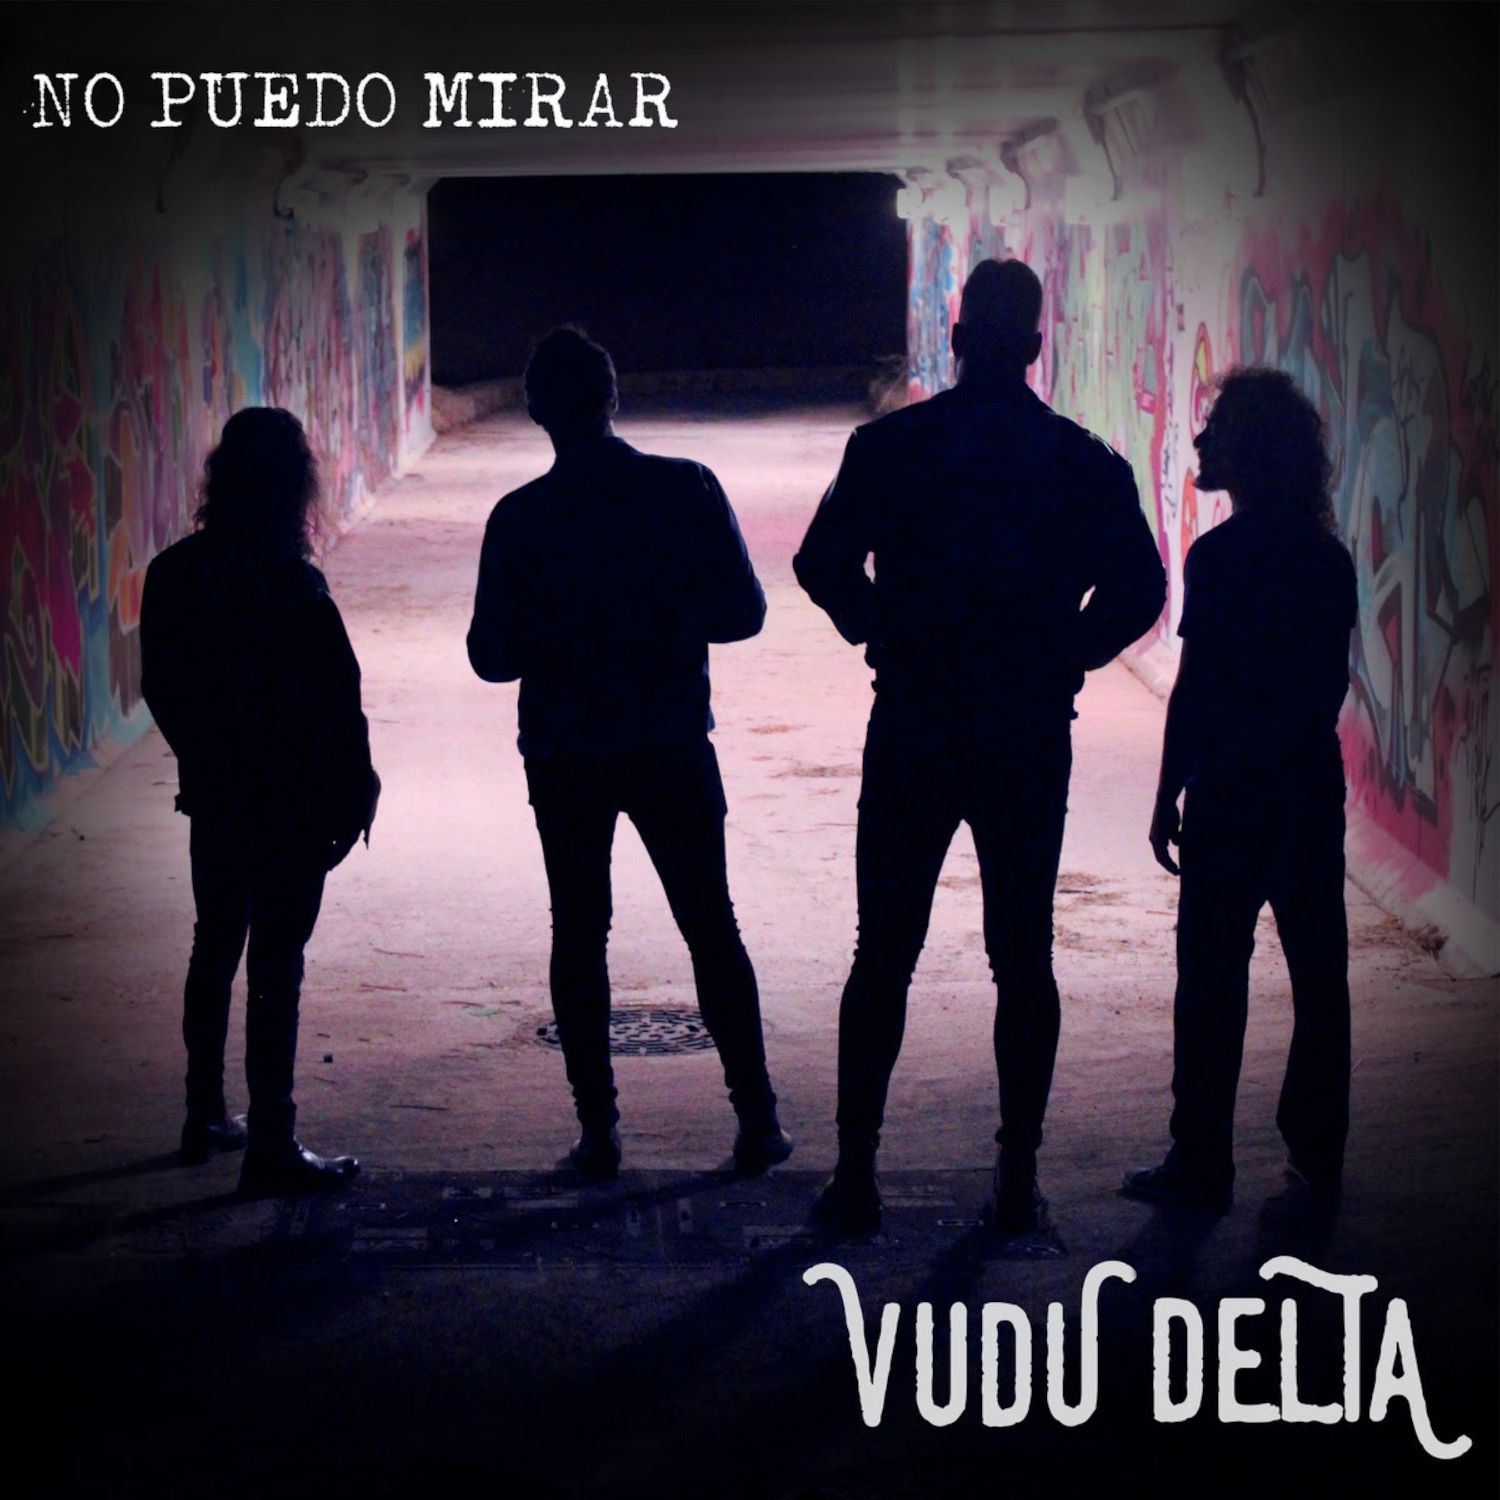 Portada de "No puedo mirar", el tercer single de Vudu Delta